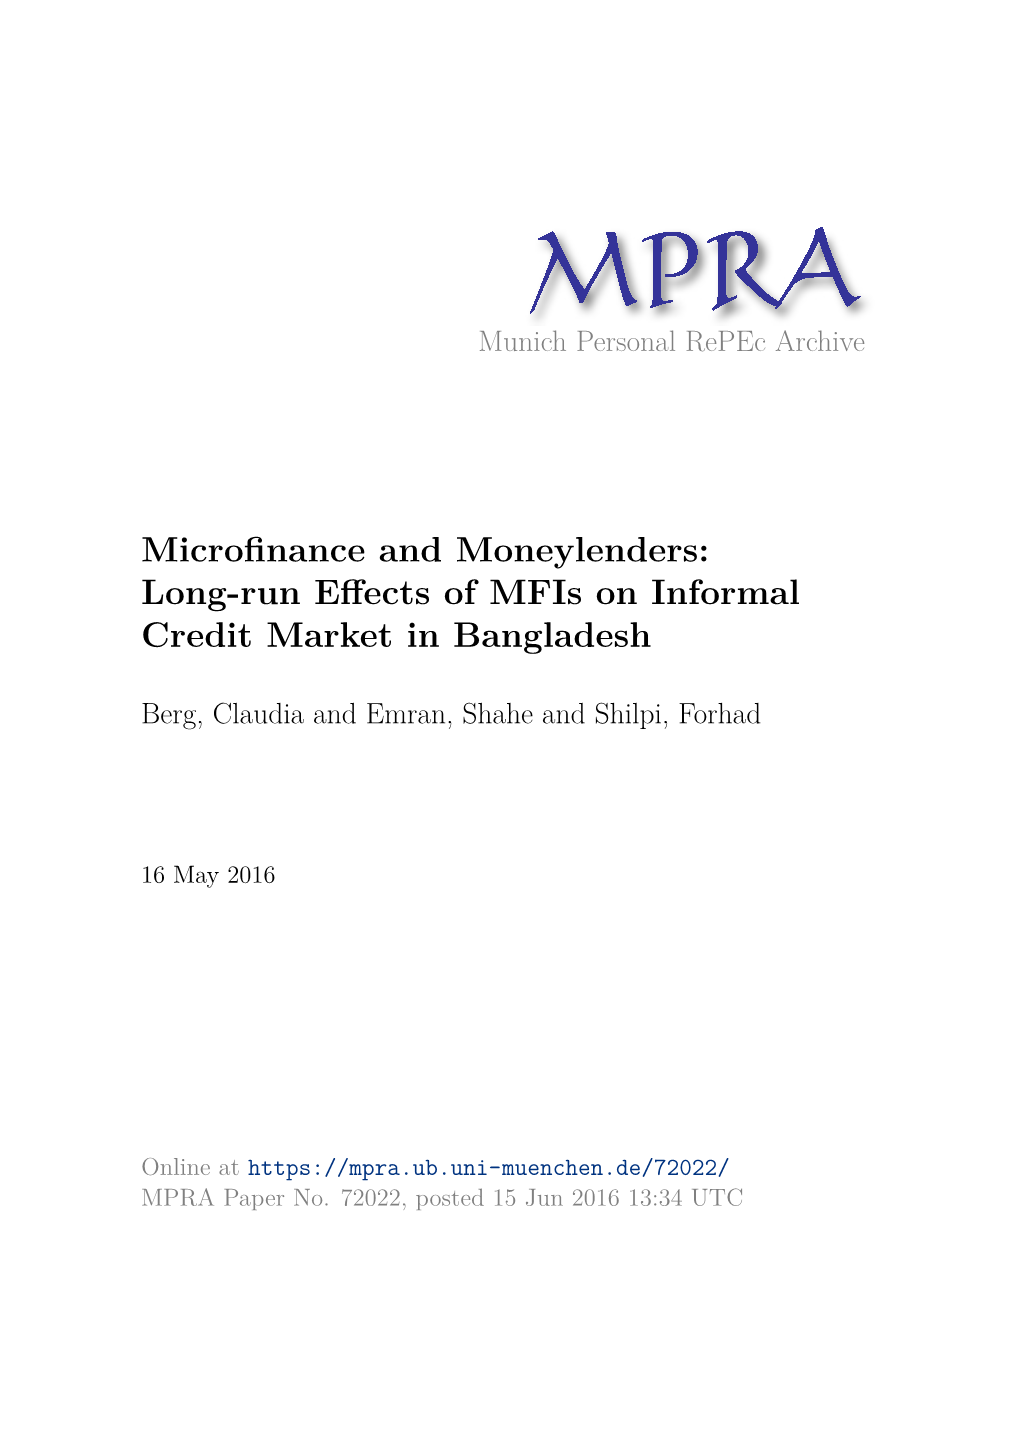 Microfinance and Moneylenders: Long-Run Effects of Mfis on Informal Credit Market in Bangladesh